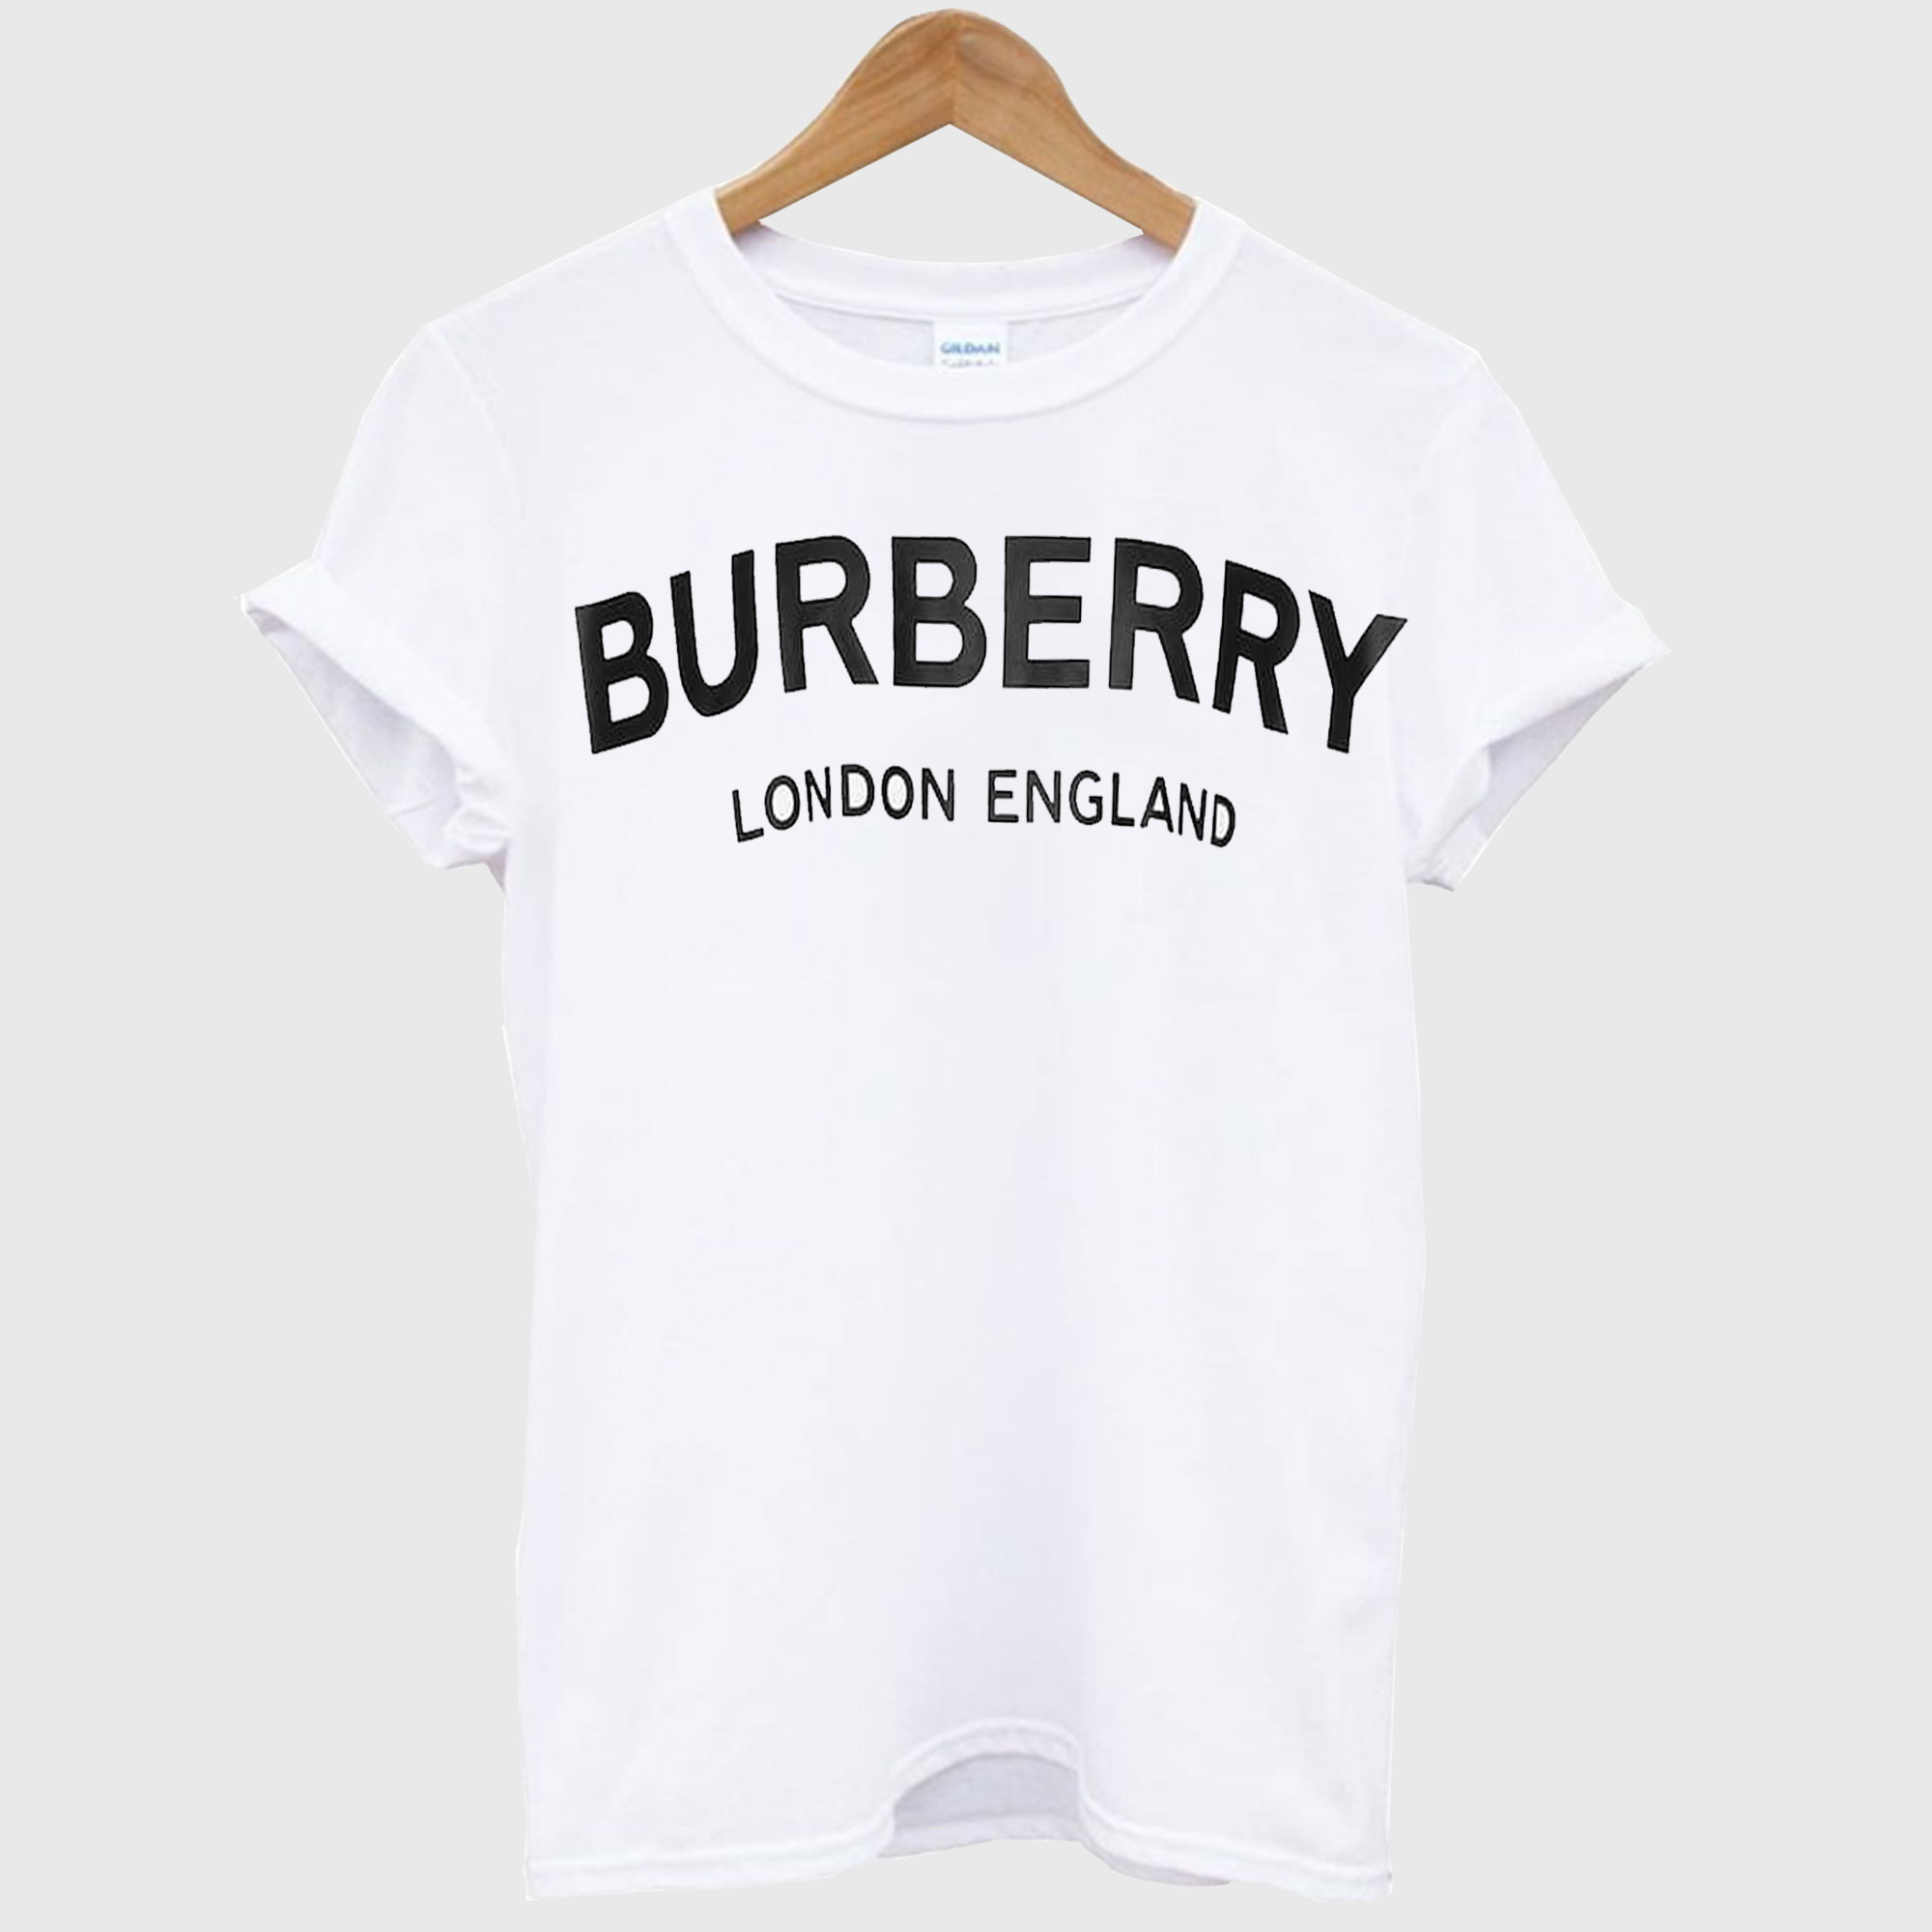 burberrys of london t shirt